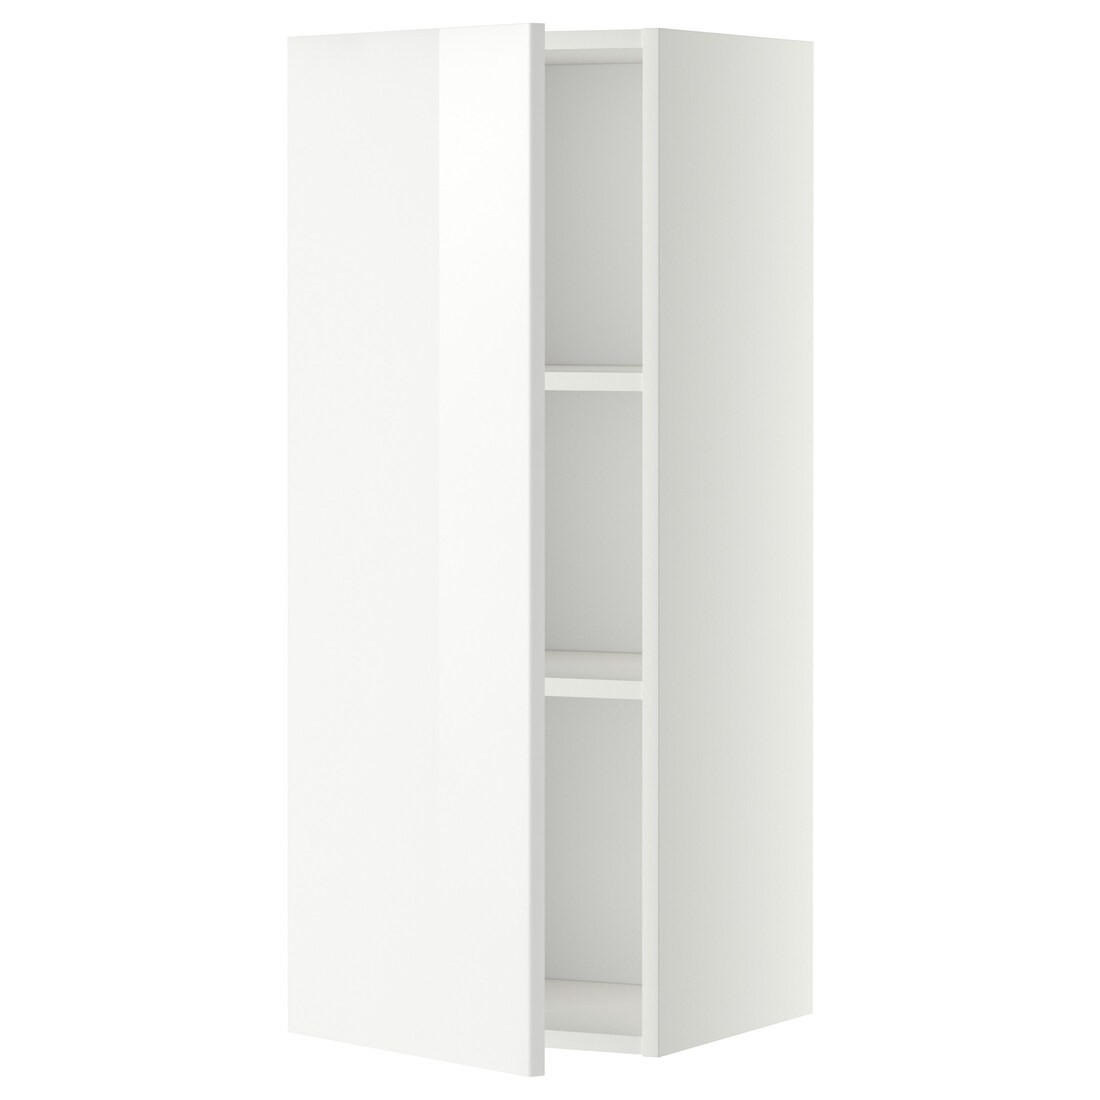 IKEA METOD МЕТОД Шкаф навесной с полками, белый / Ringhult белый, 40x100 см 69456182 | 694.561.82